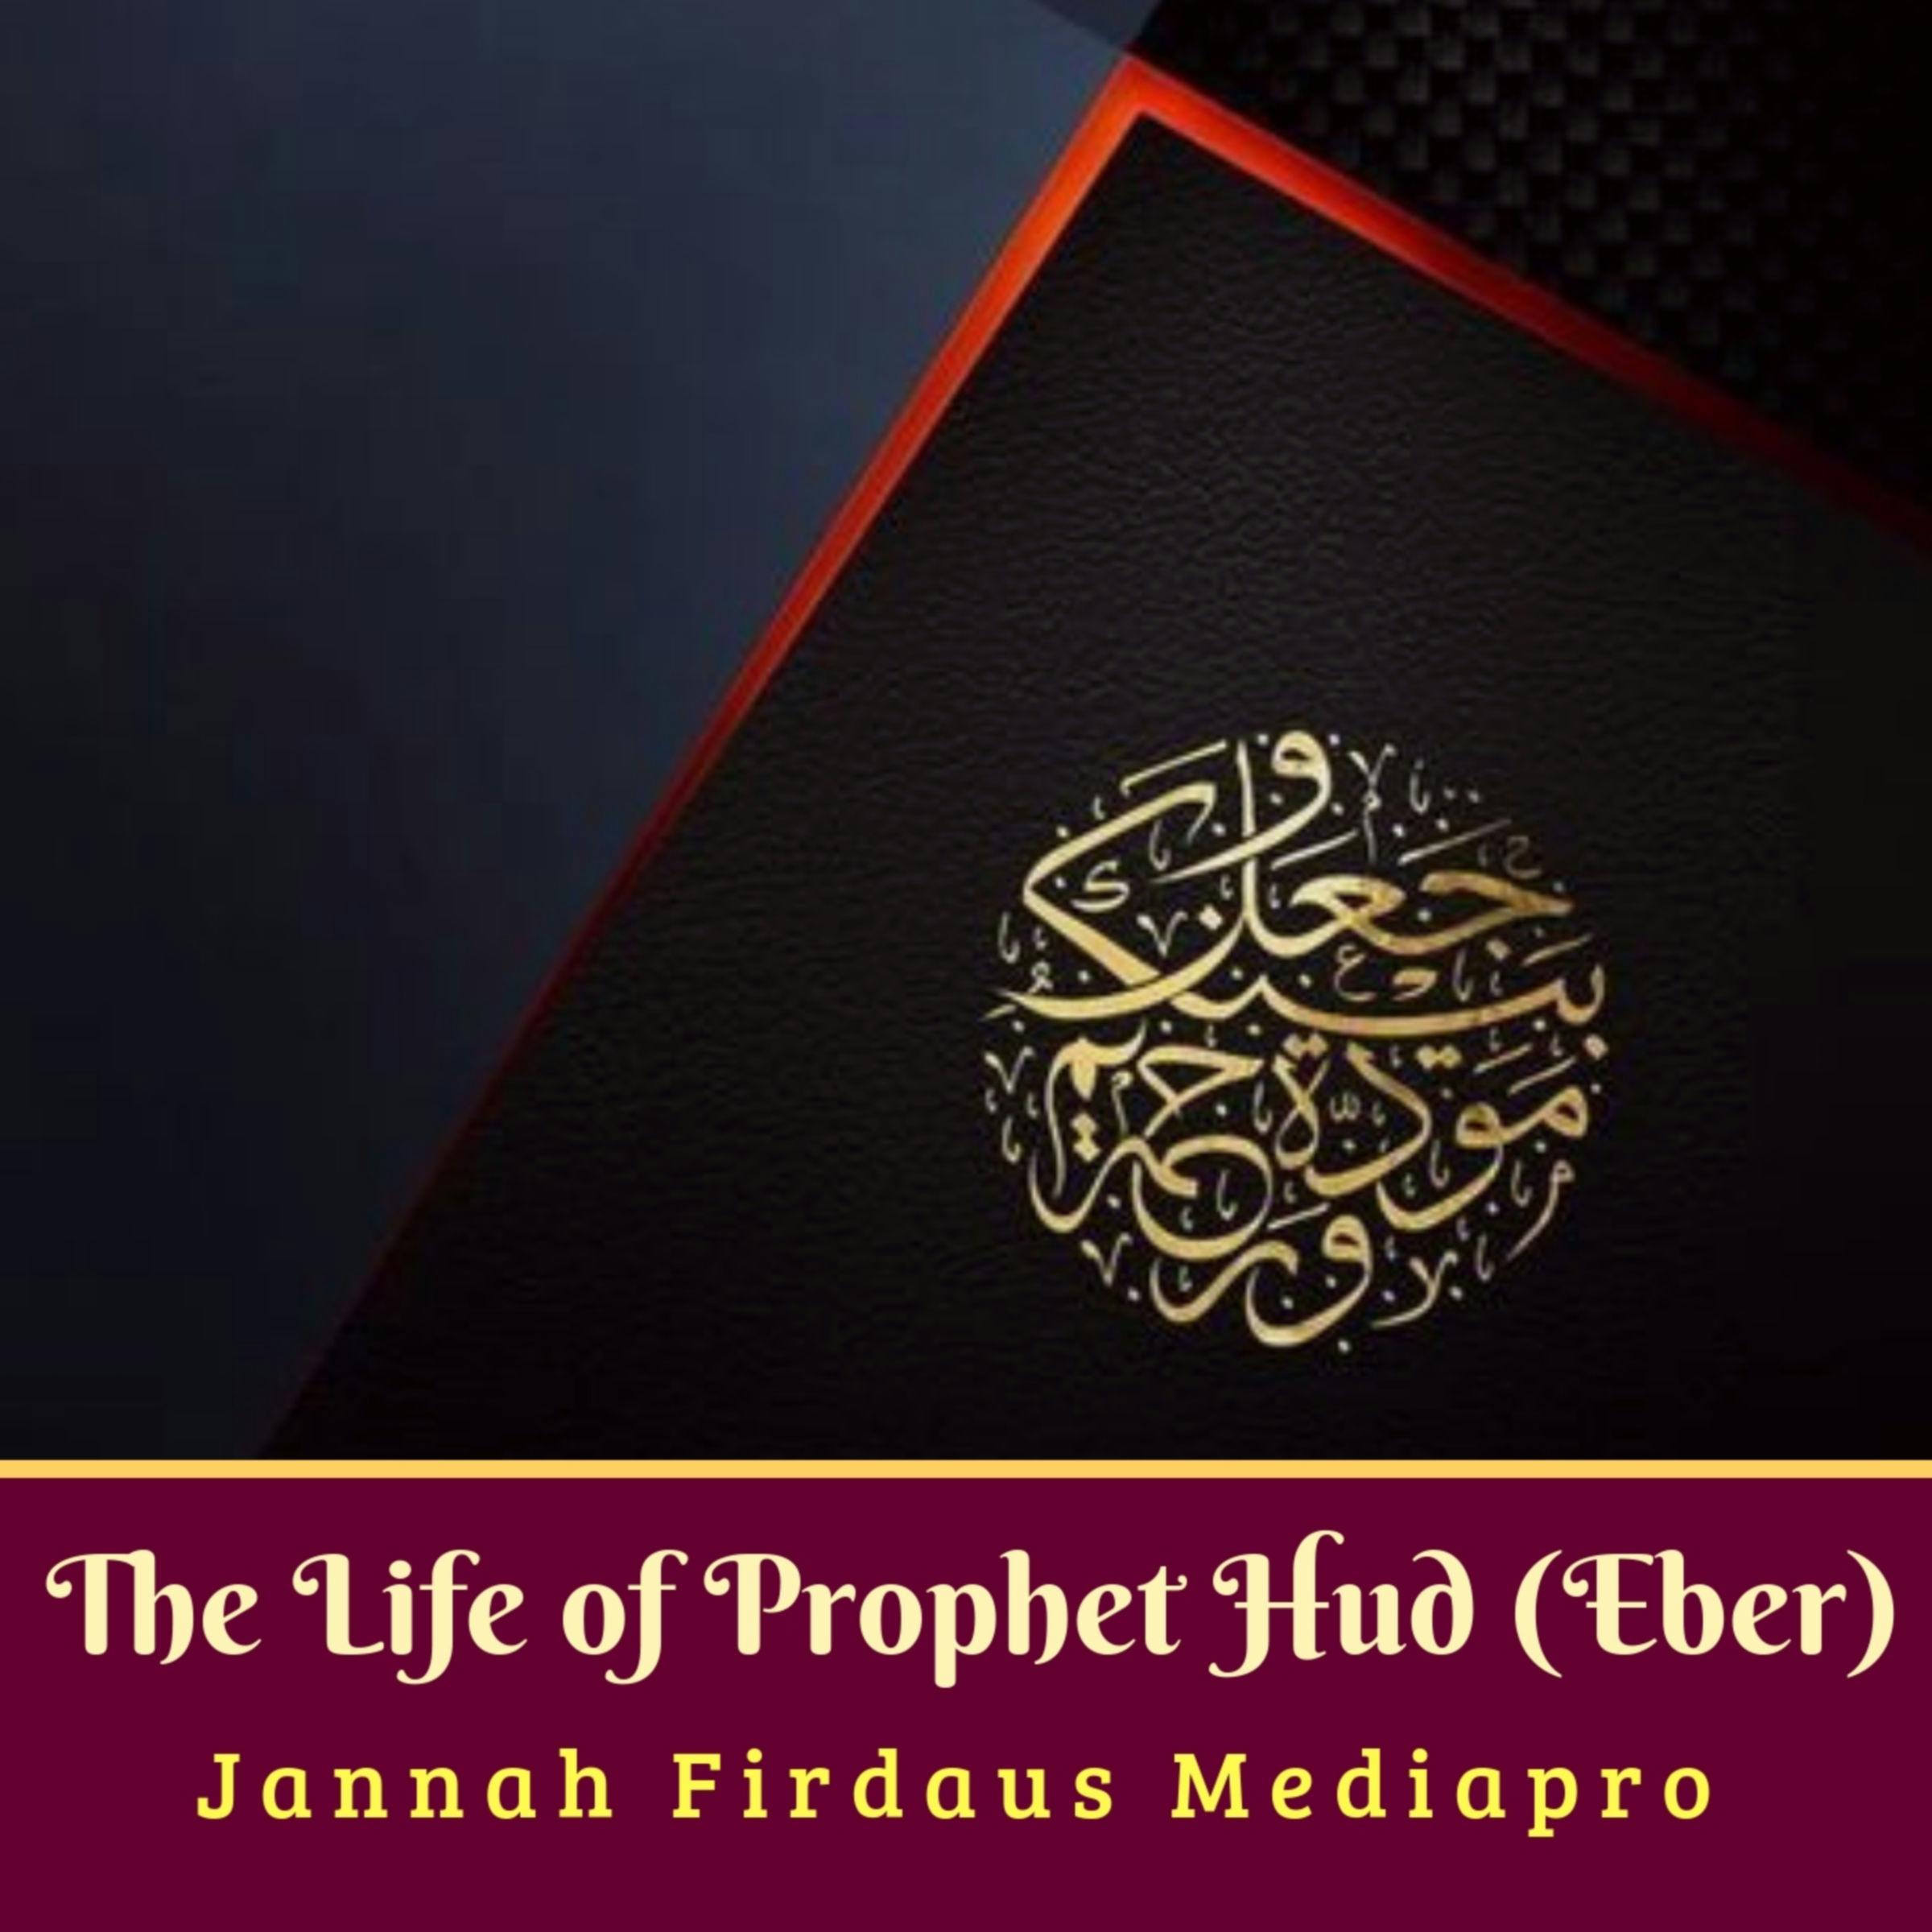 The Life of Prophet Hud (Eber) - Jannah Firdaus Mediapro